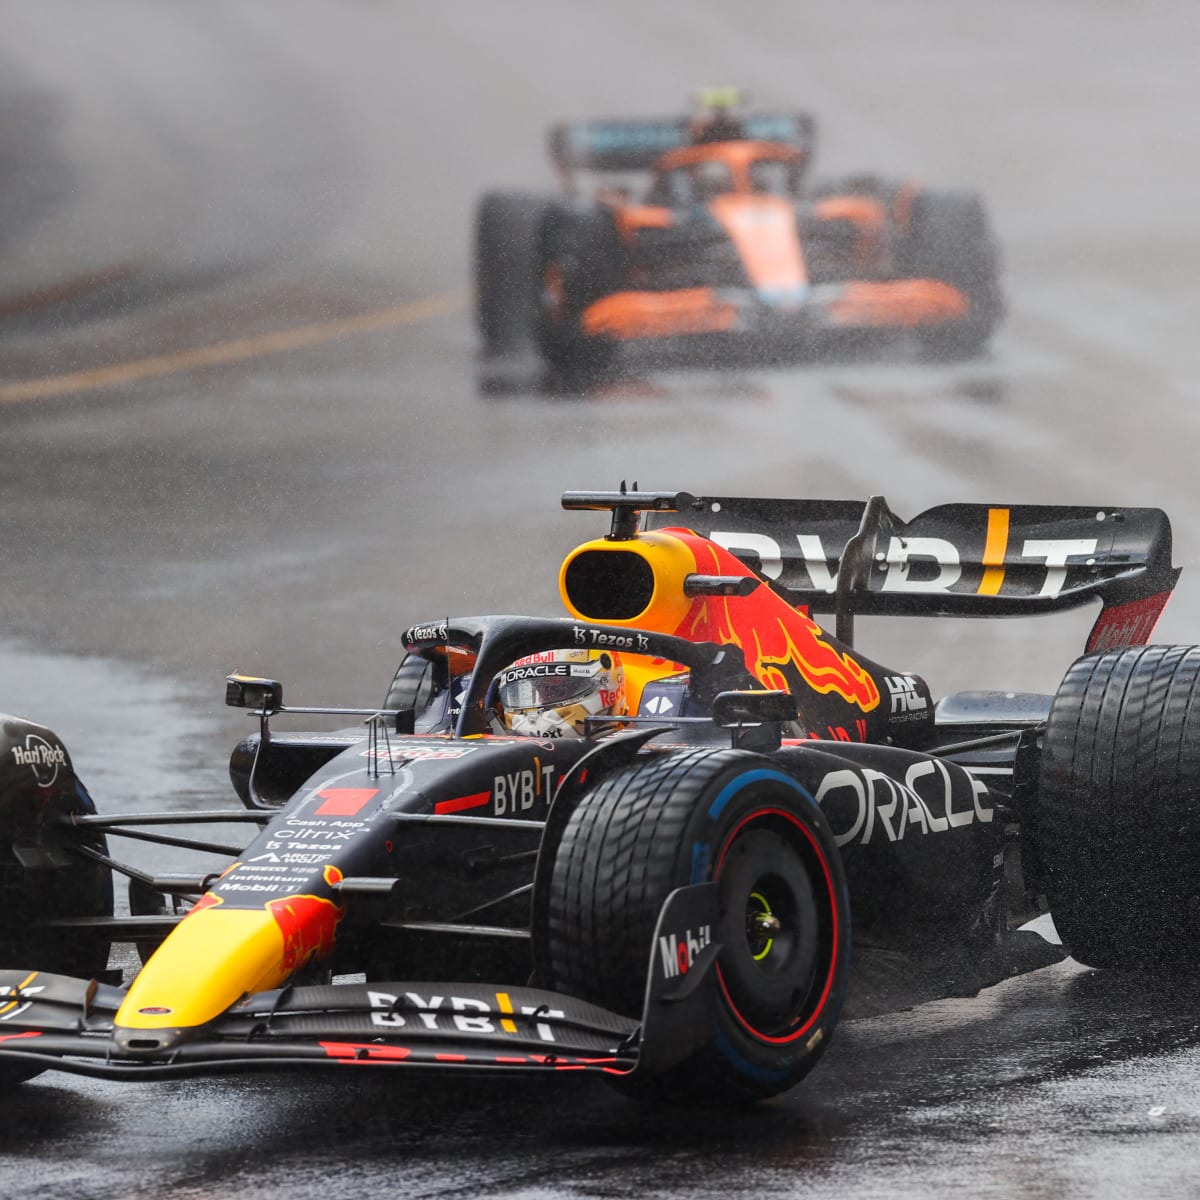 EXCLUSIVE: Red Bull Racing in JP Morgan Chase sponsorship talks